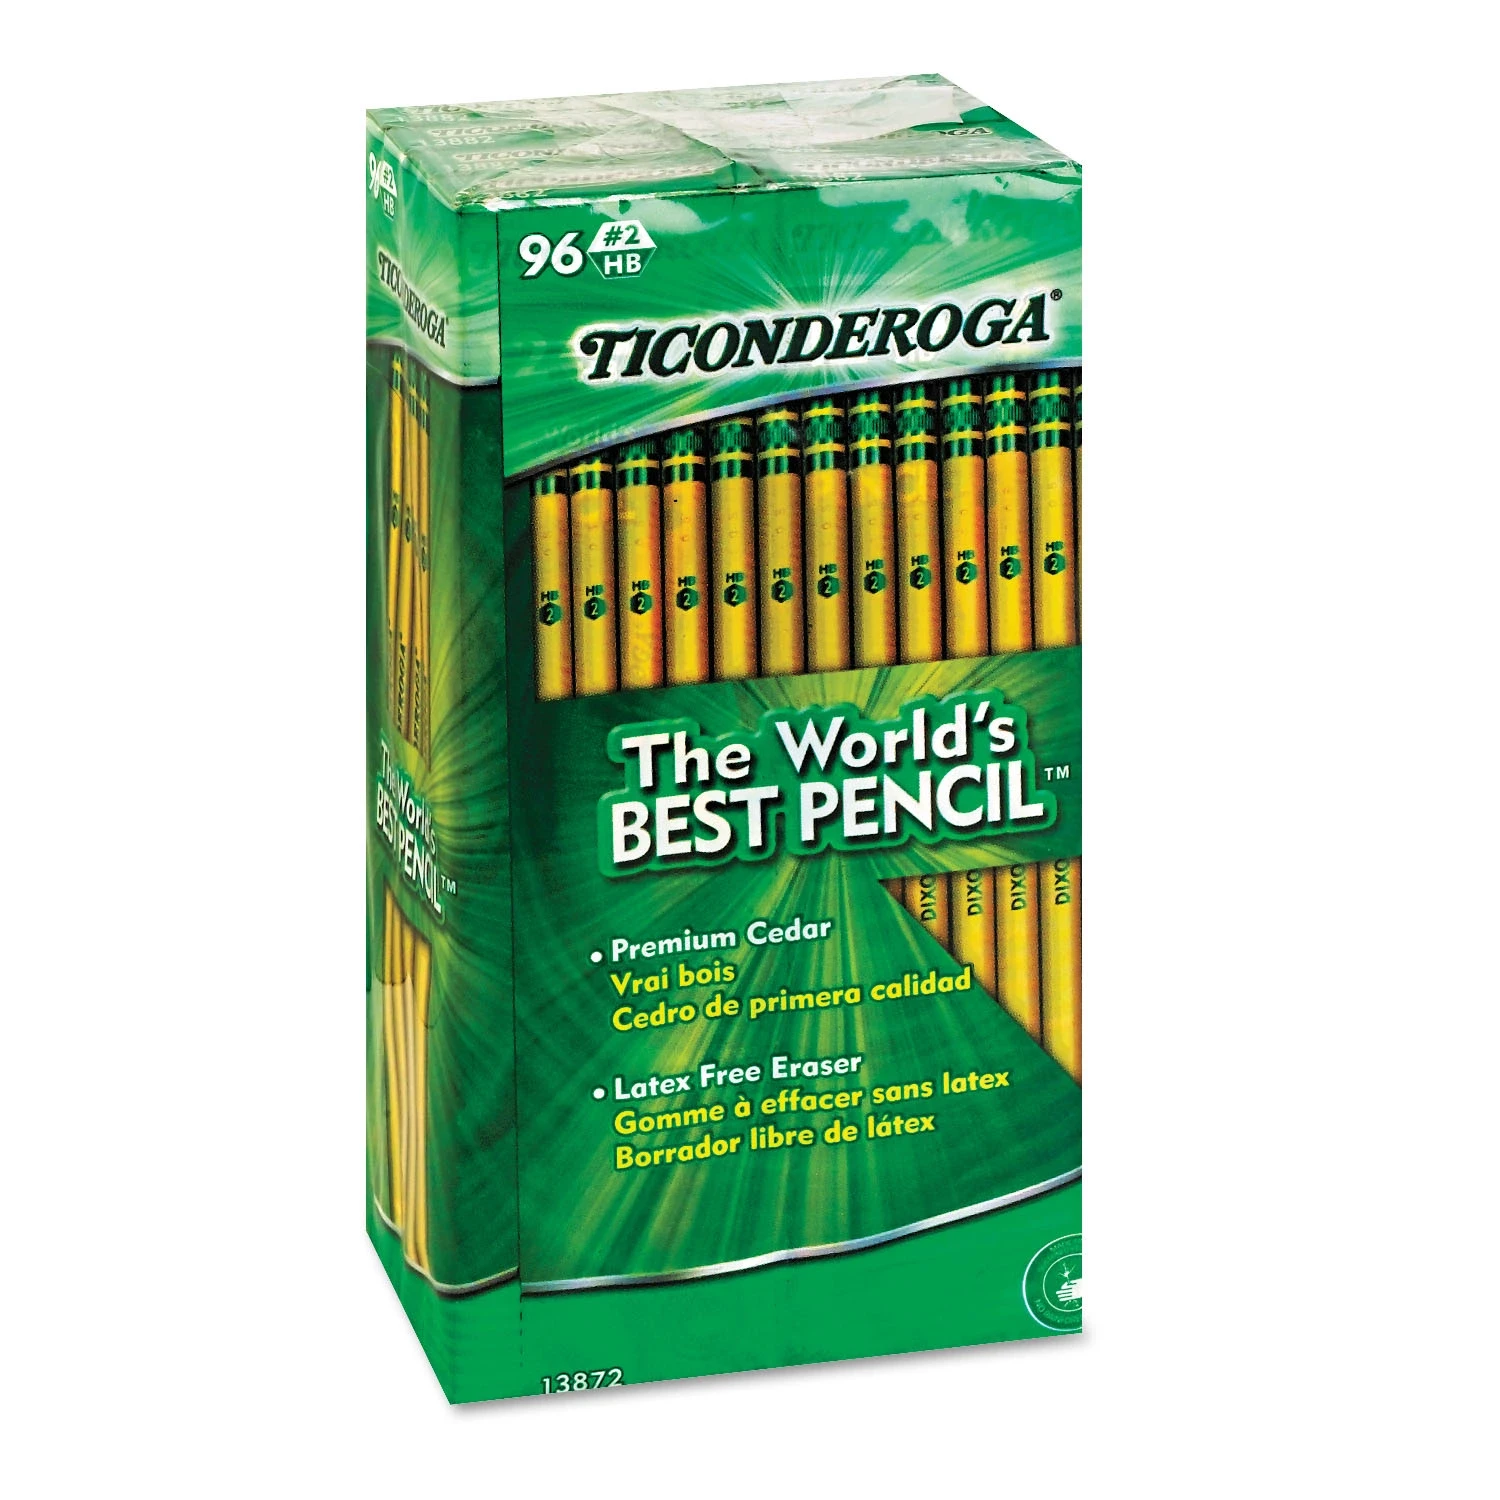 Dixon Ticonderoga Woodcase Pencil, HB #2, Yellow Barrel, 96ct., Pack Of 3